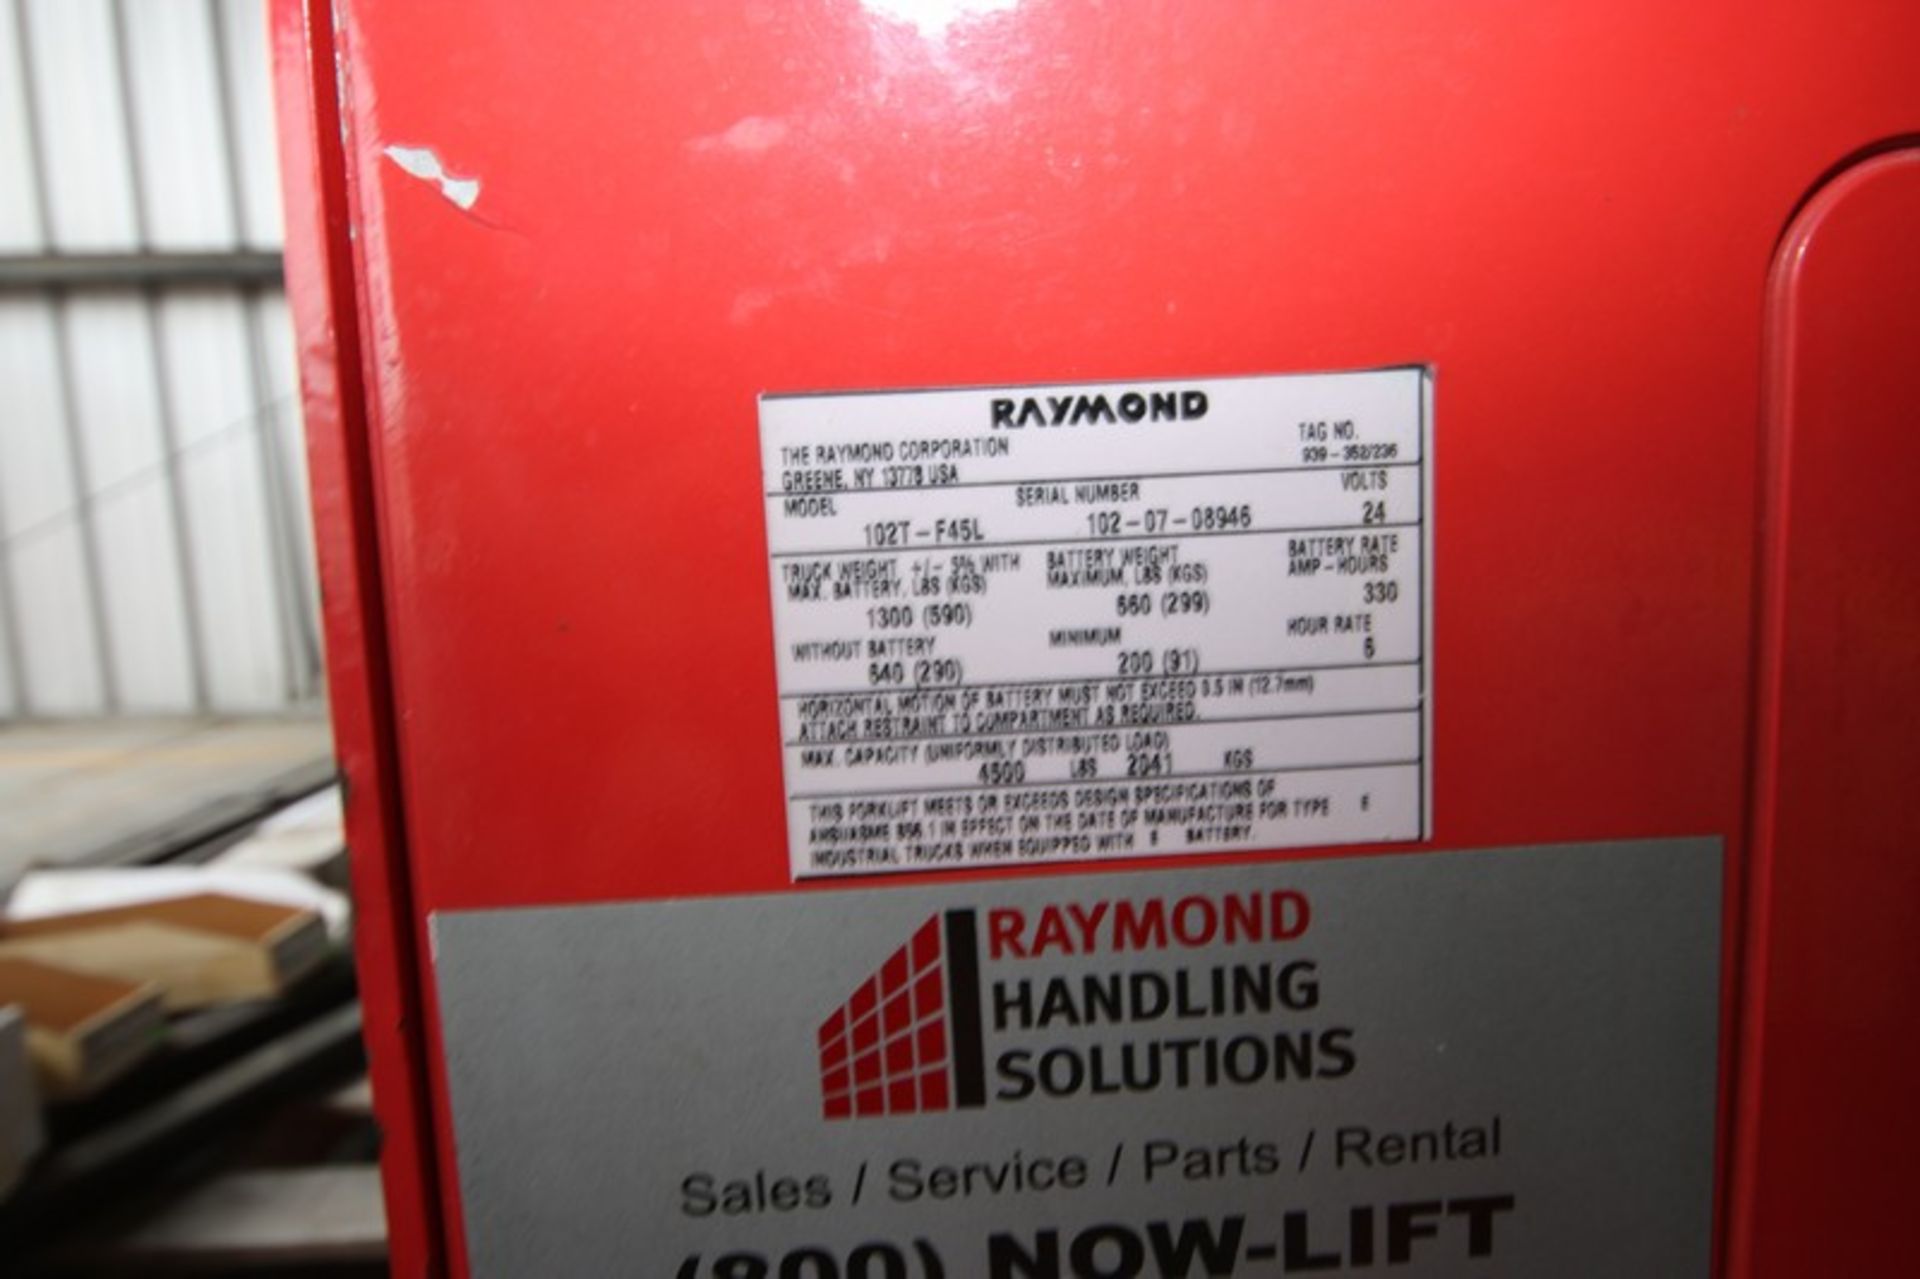 Raymond 4,500 lb. Electric Pallet Jack, M/N 102T-F45L, S/N 102-07-08946, 24 Volt Battery - Image 2 of 3